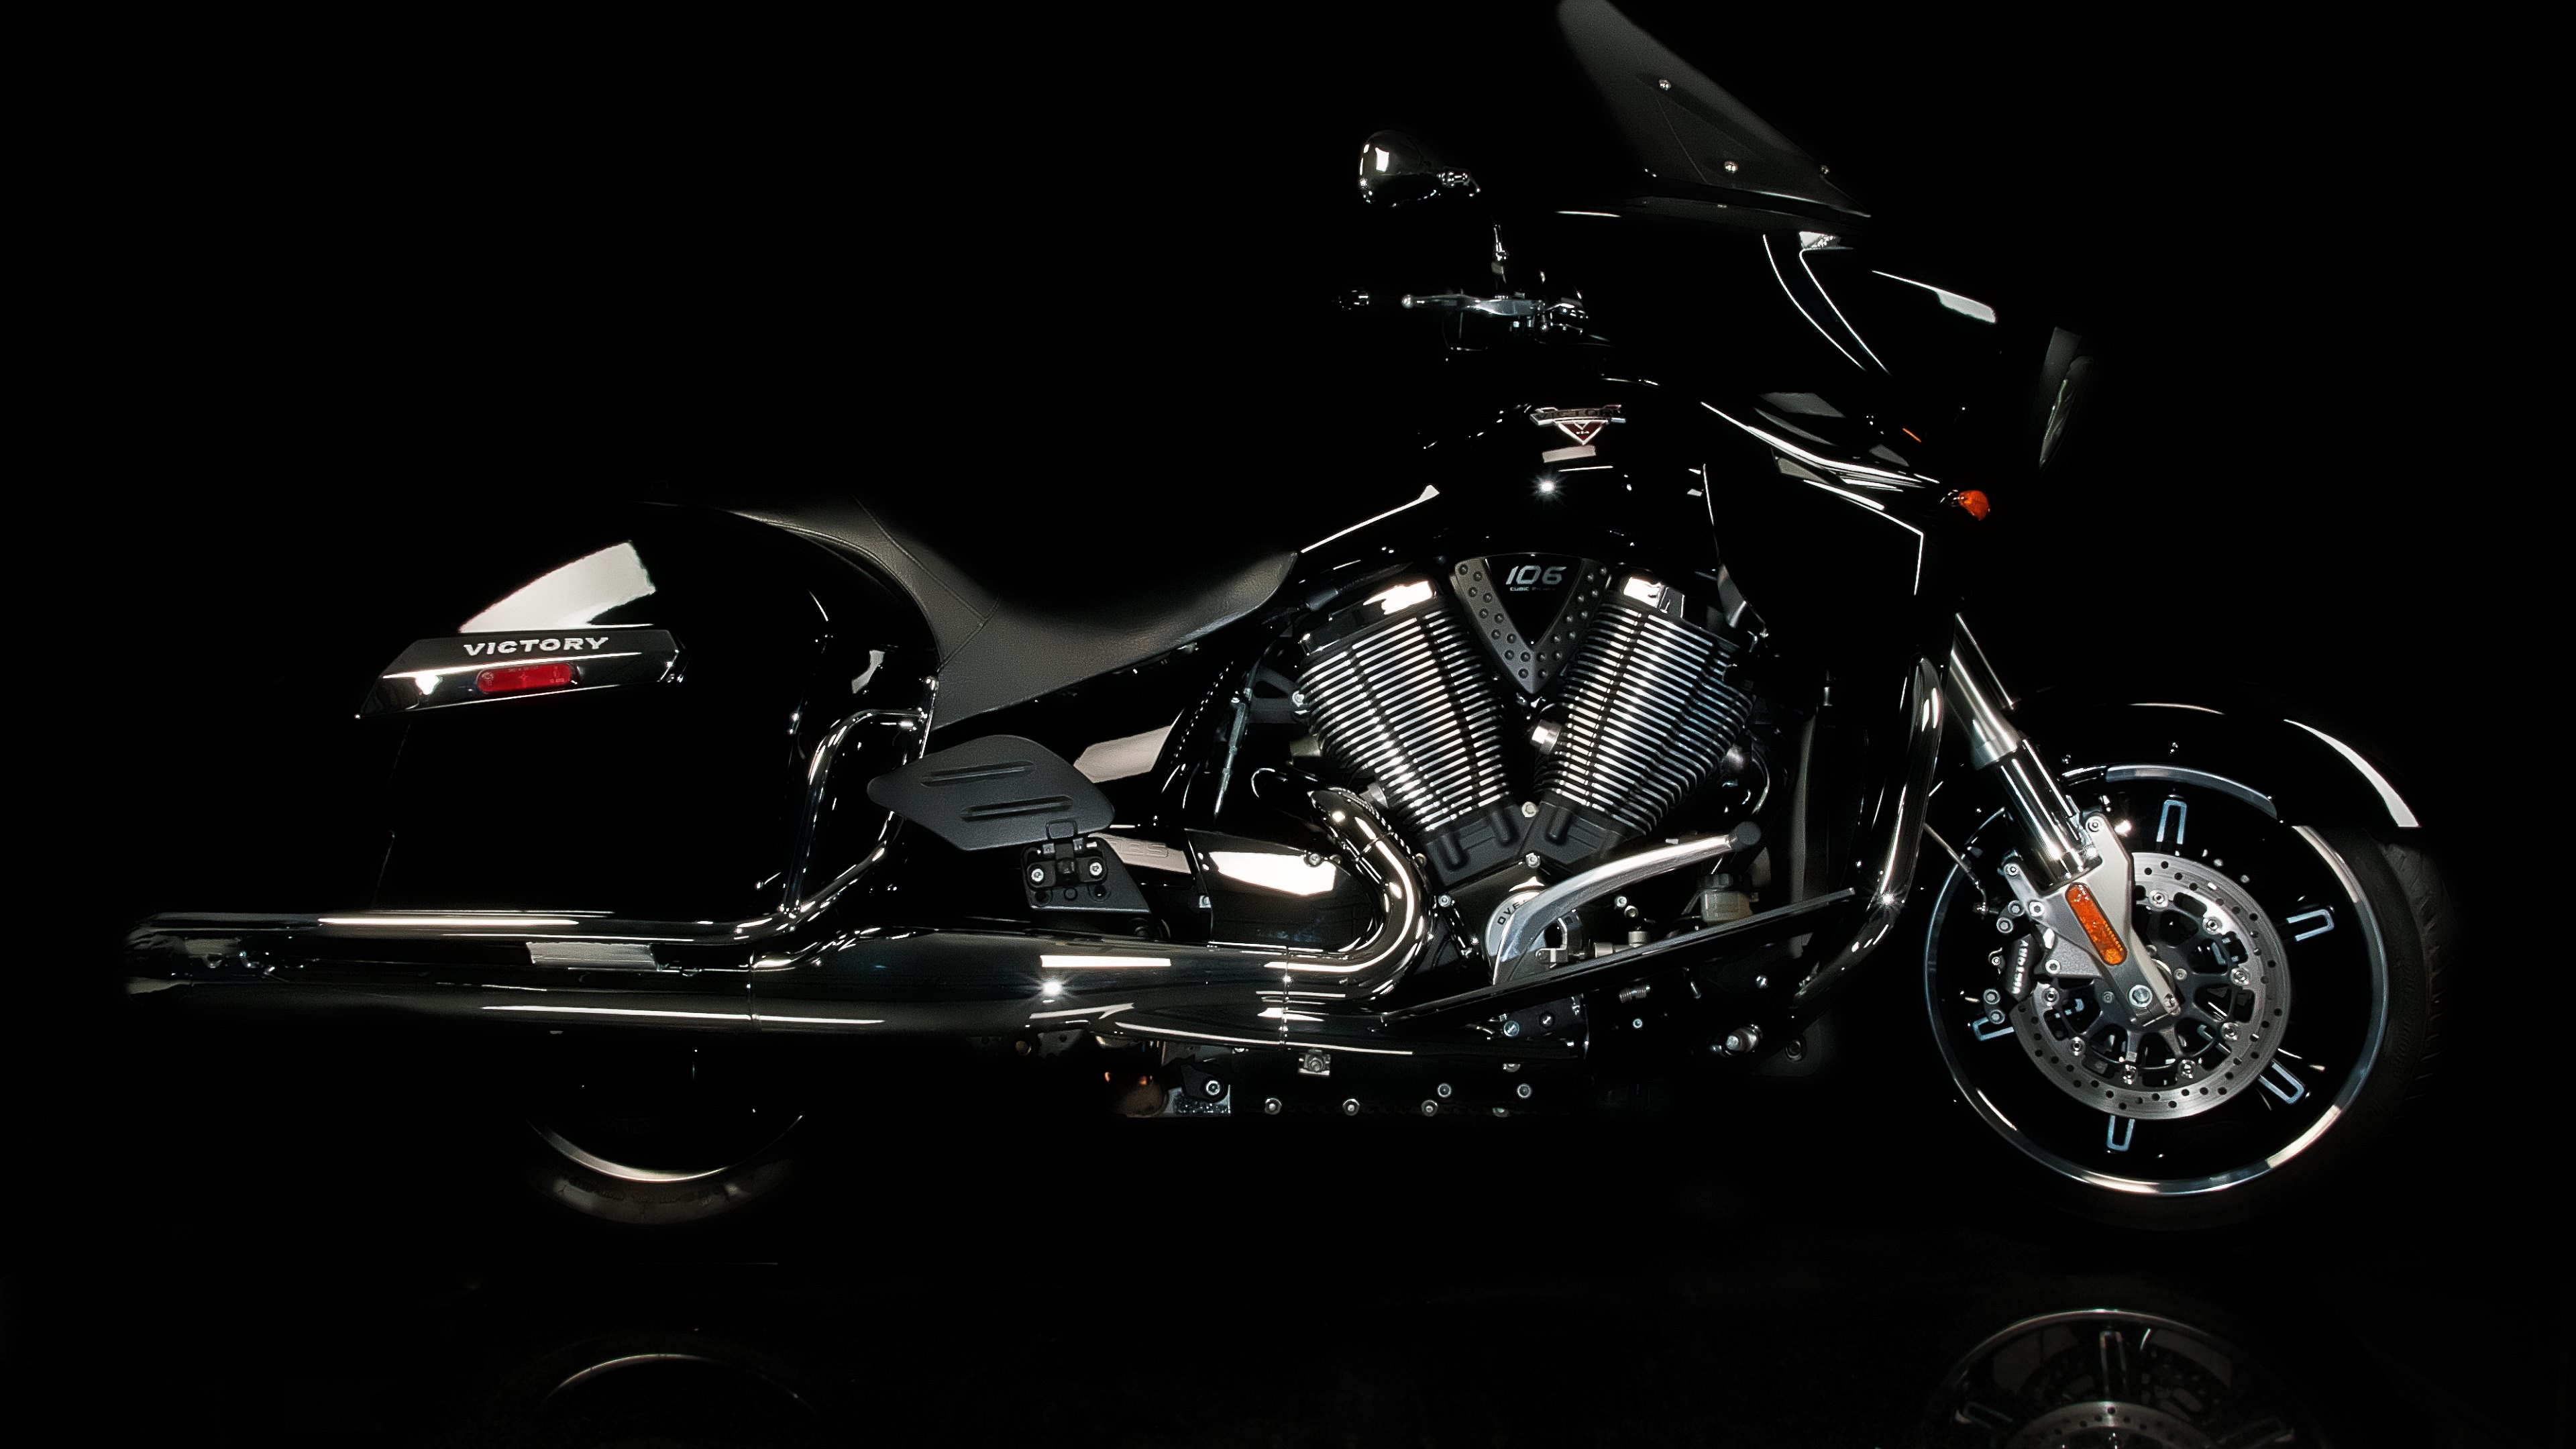 3840x2160 Wallpaper: Victory Motorcycles. Ultra HD 4K 